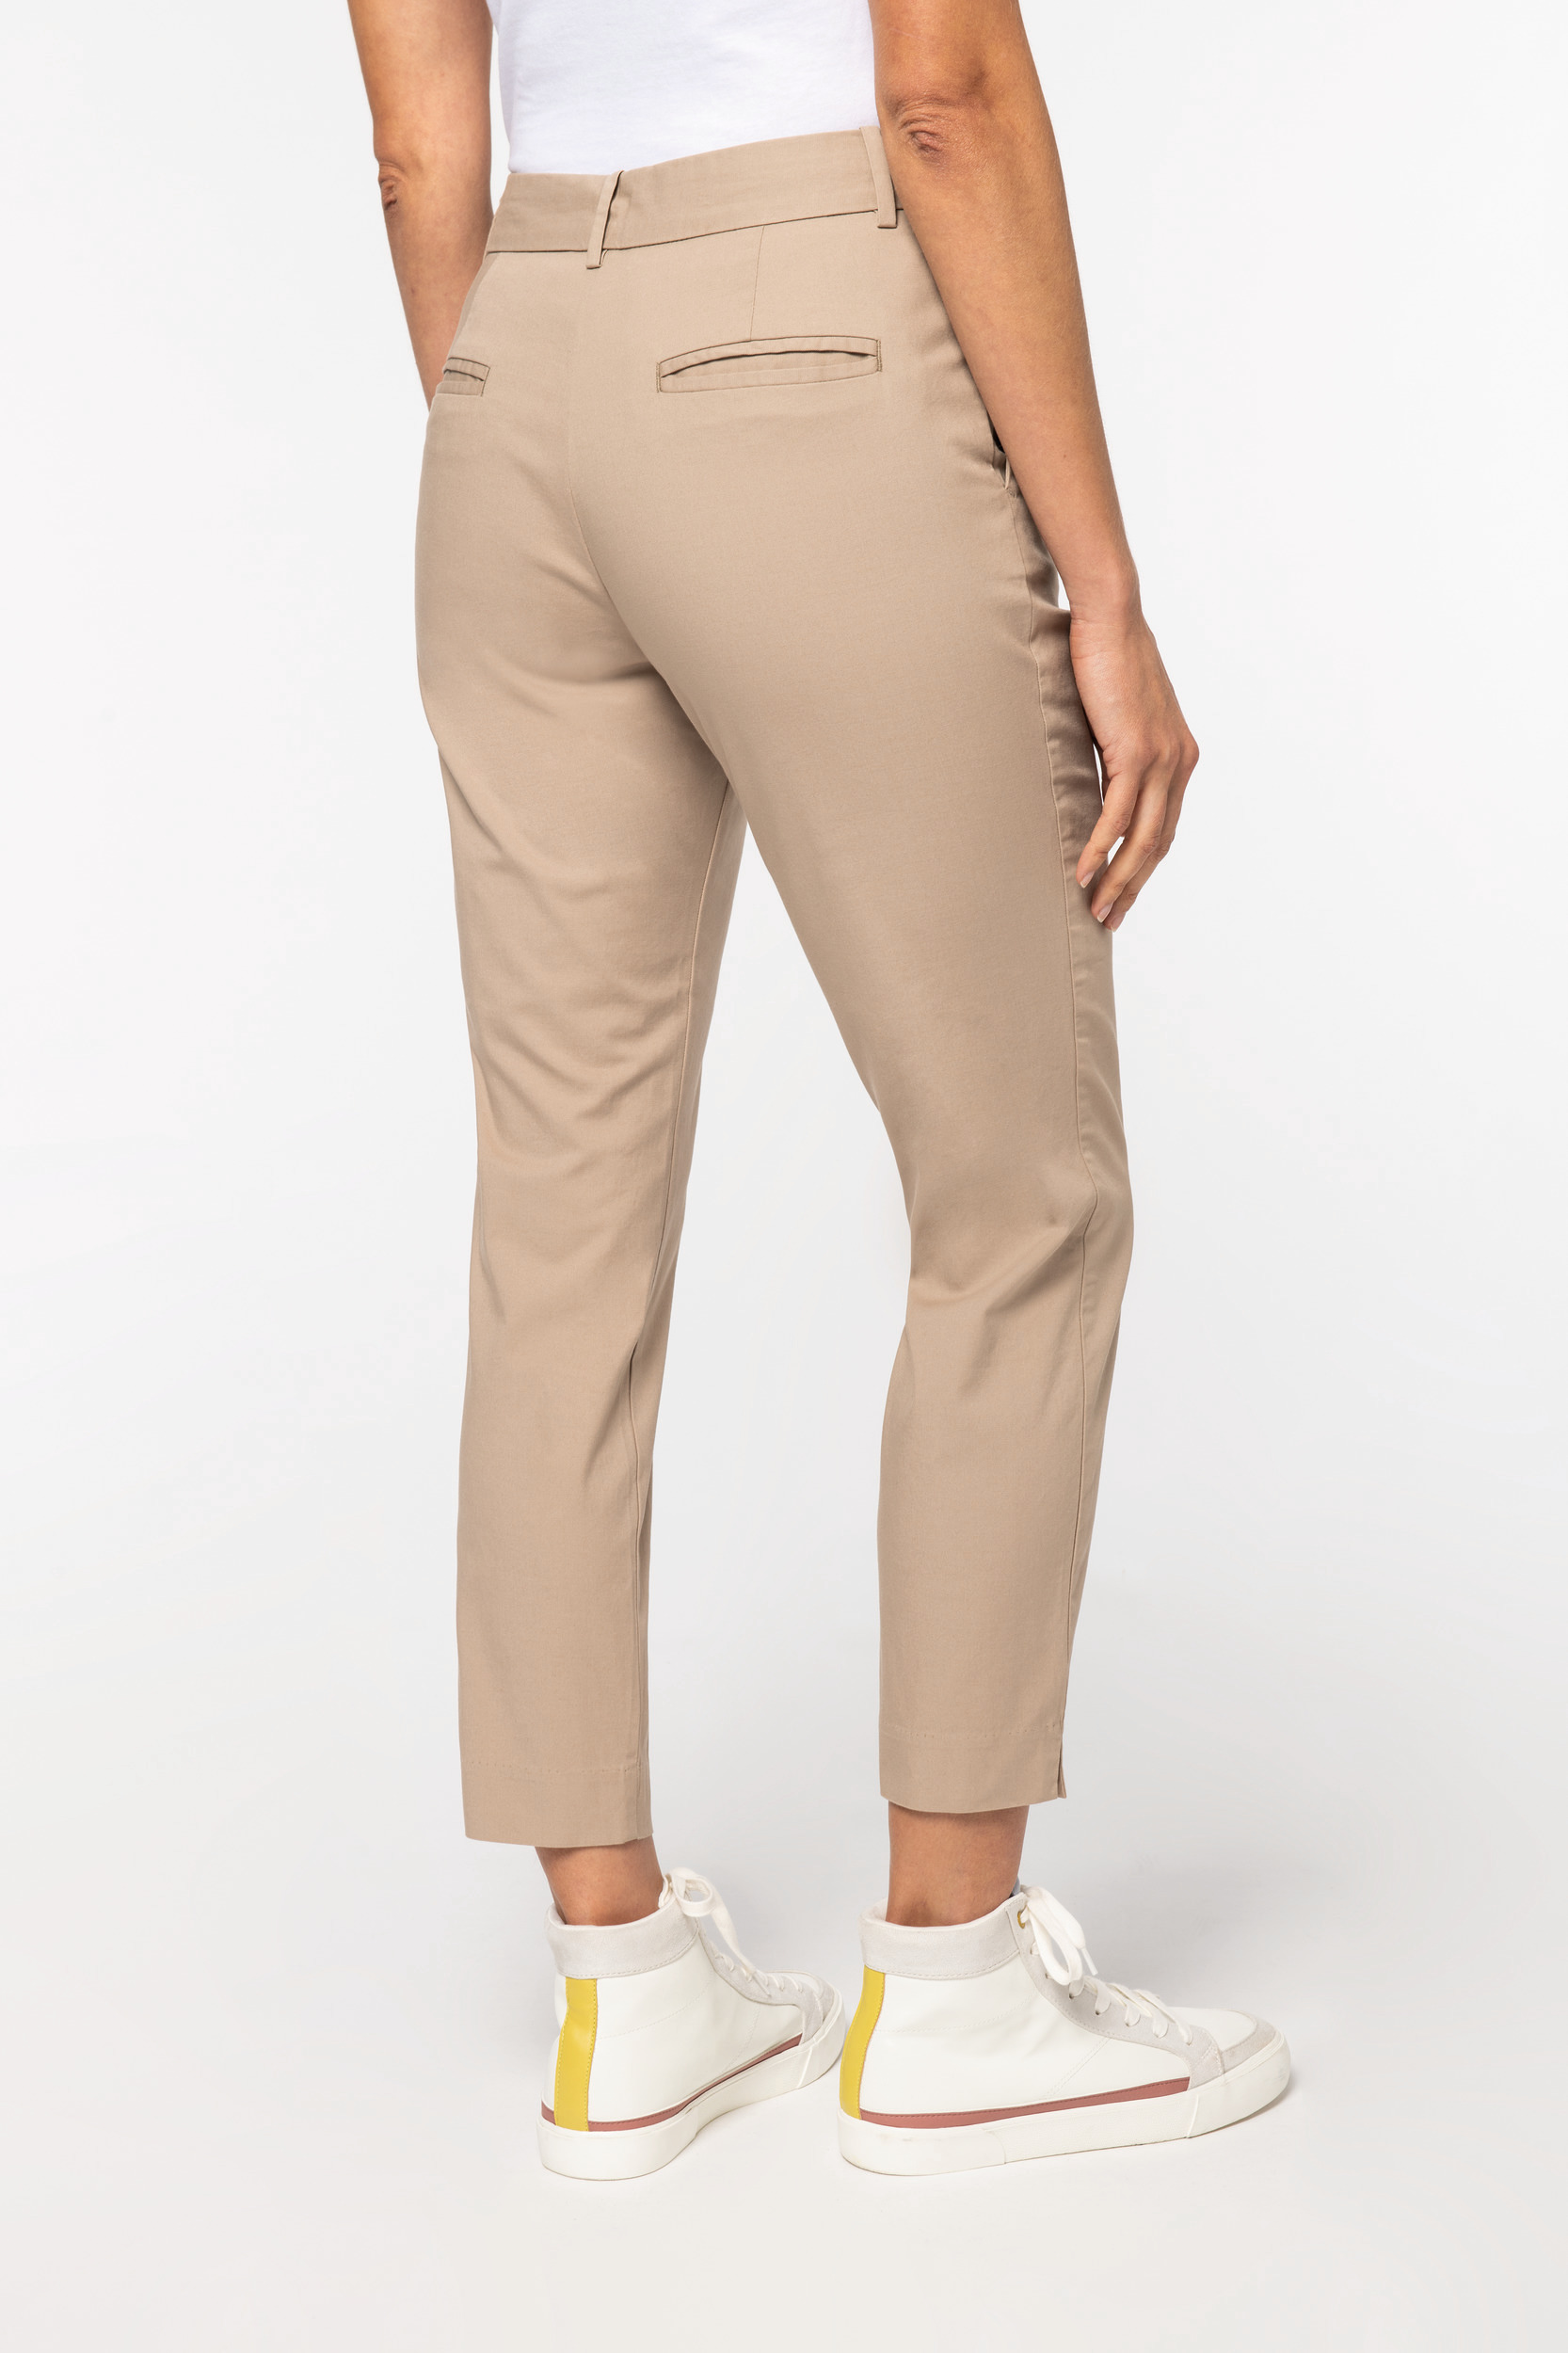 Buy Pants for Women Online at Fabindia